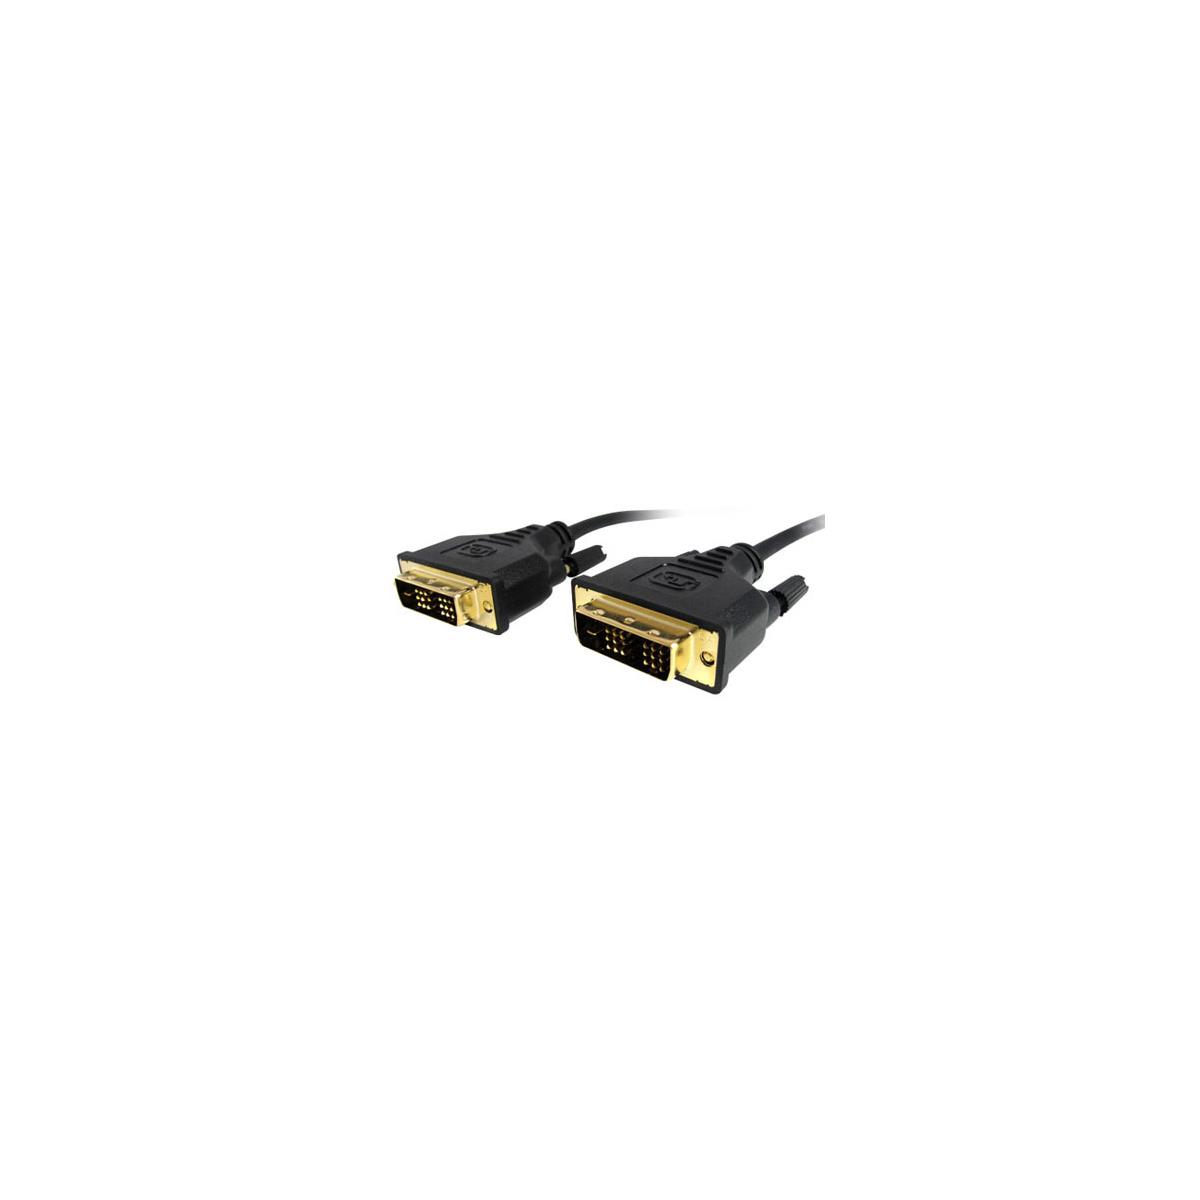 

Comprehensive 3' MicroFlex Low Profile DVI-D Male to DVI-D Male Cable